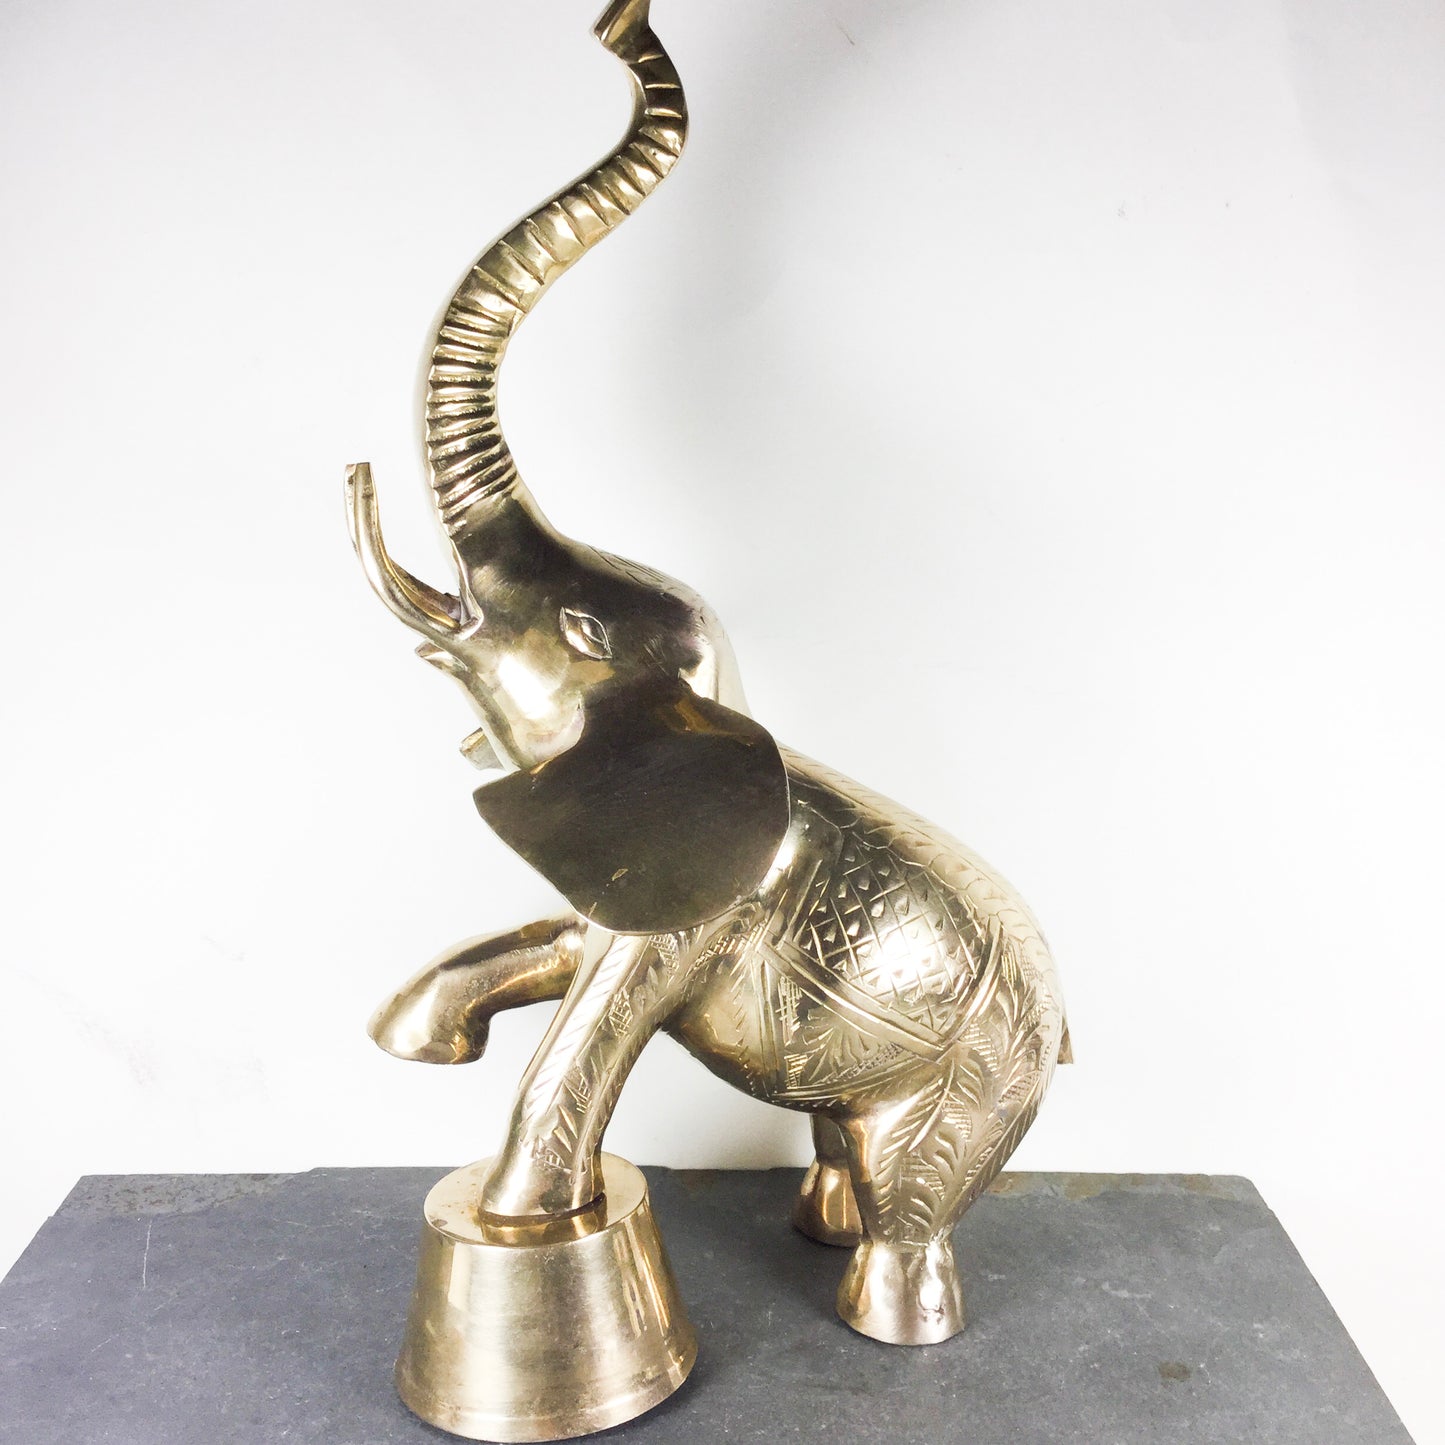 Brass Elephant Statue - very detailed